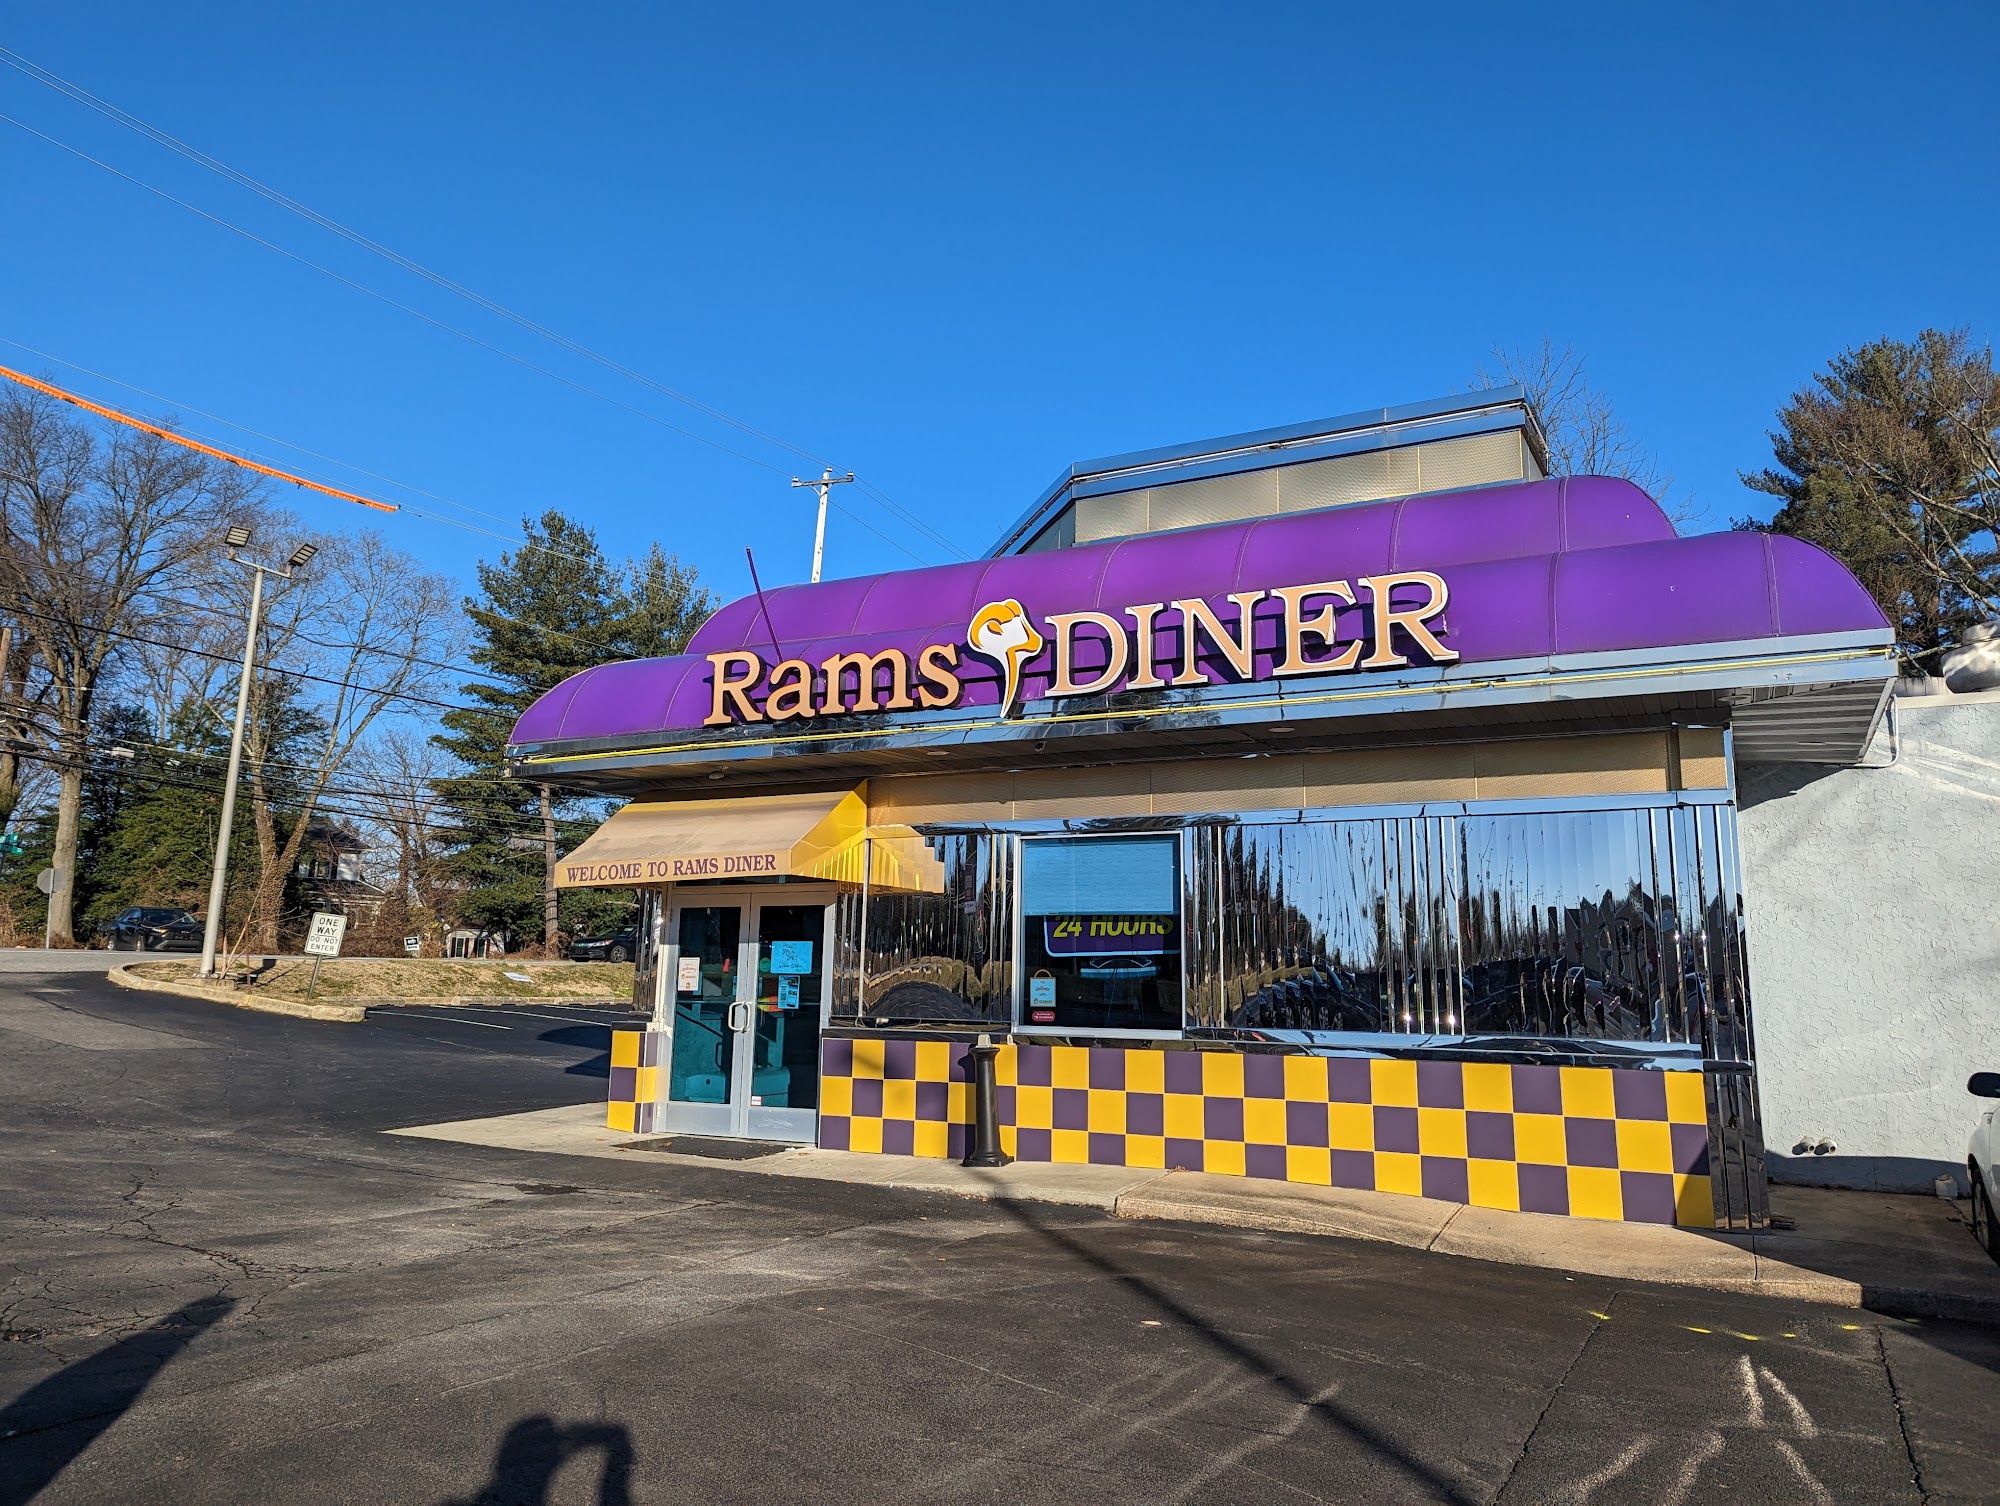 Rams Diner